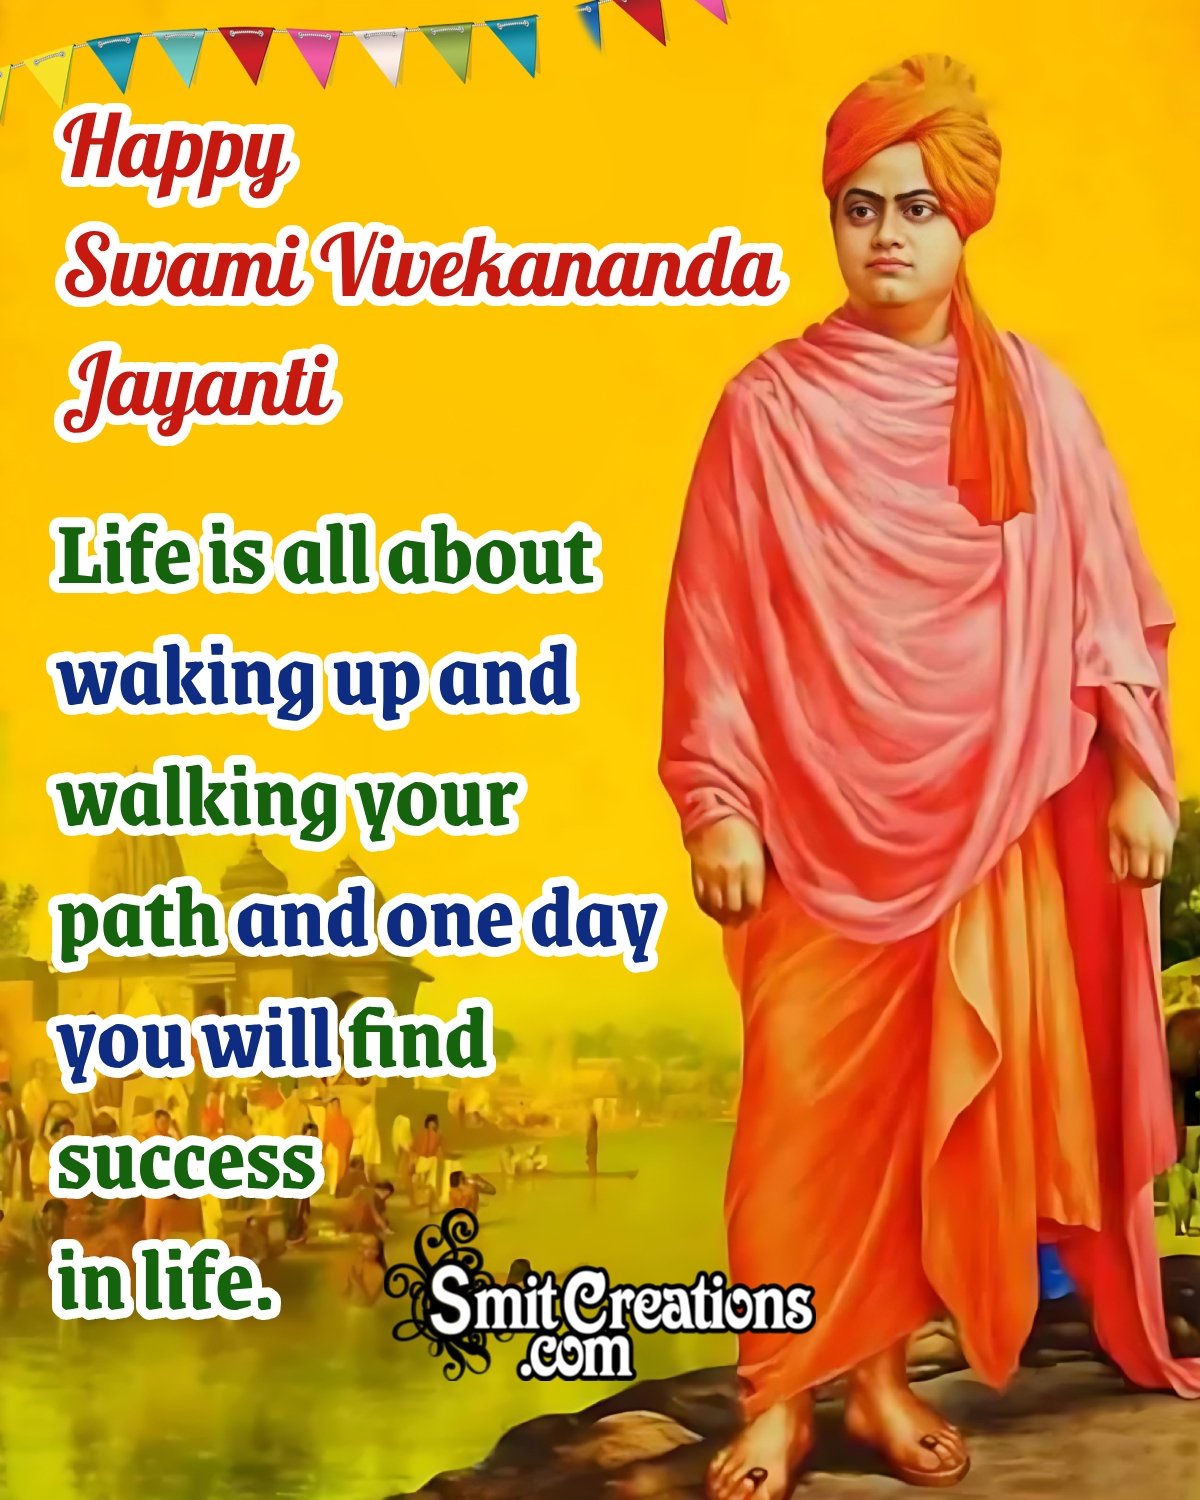 Swami Vivekananda Jayanti Wishes